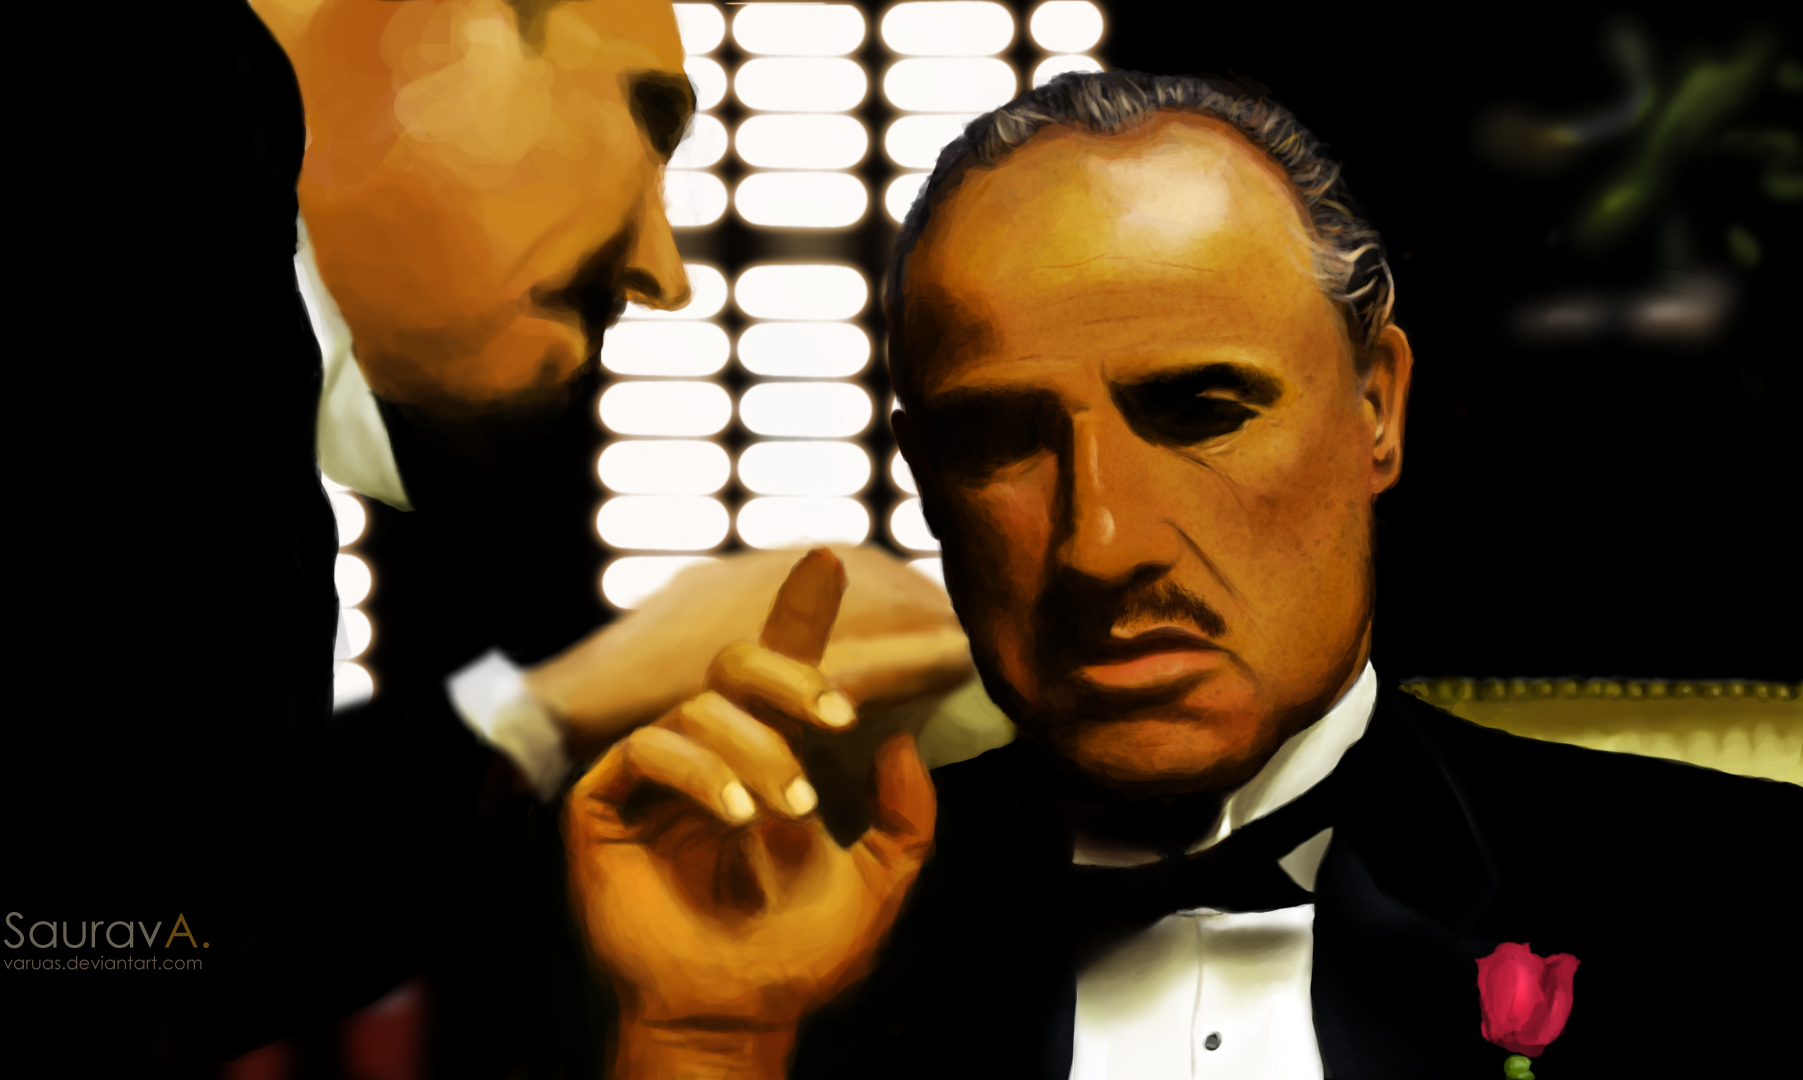 Don Vito Corleone Quotes. QuotesGram